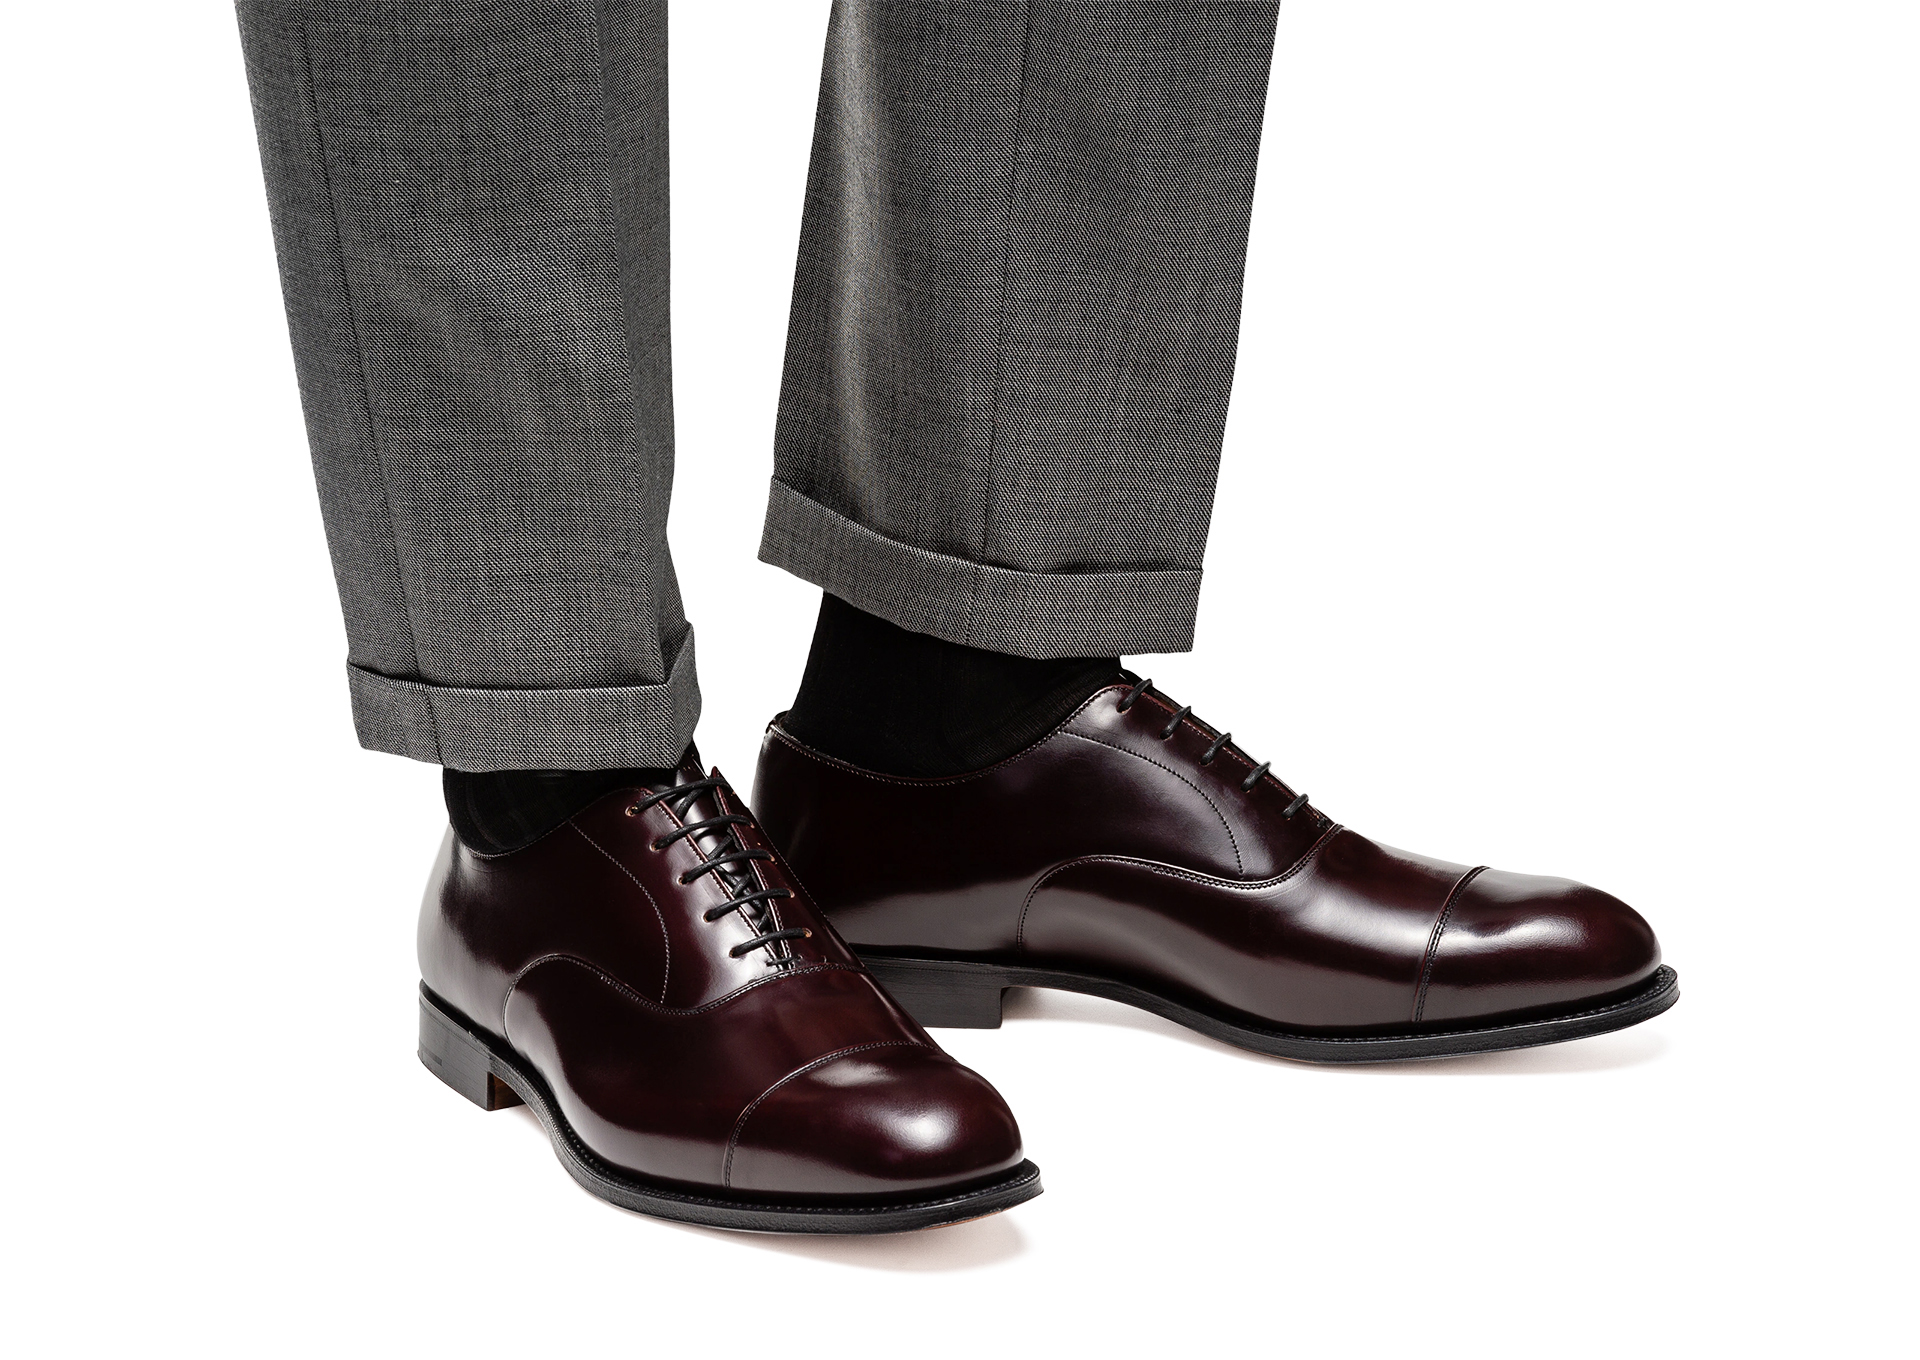 burgundy plain-toe oxfords with grey slacks